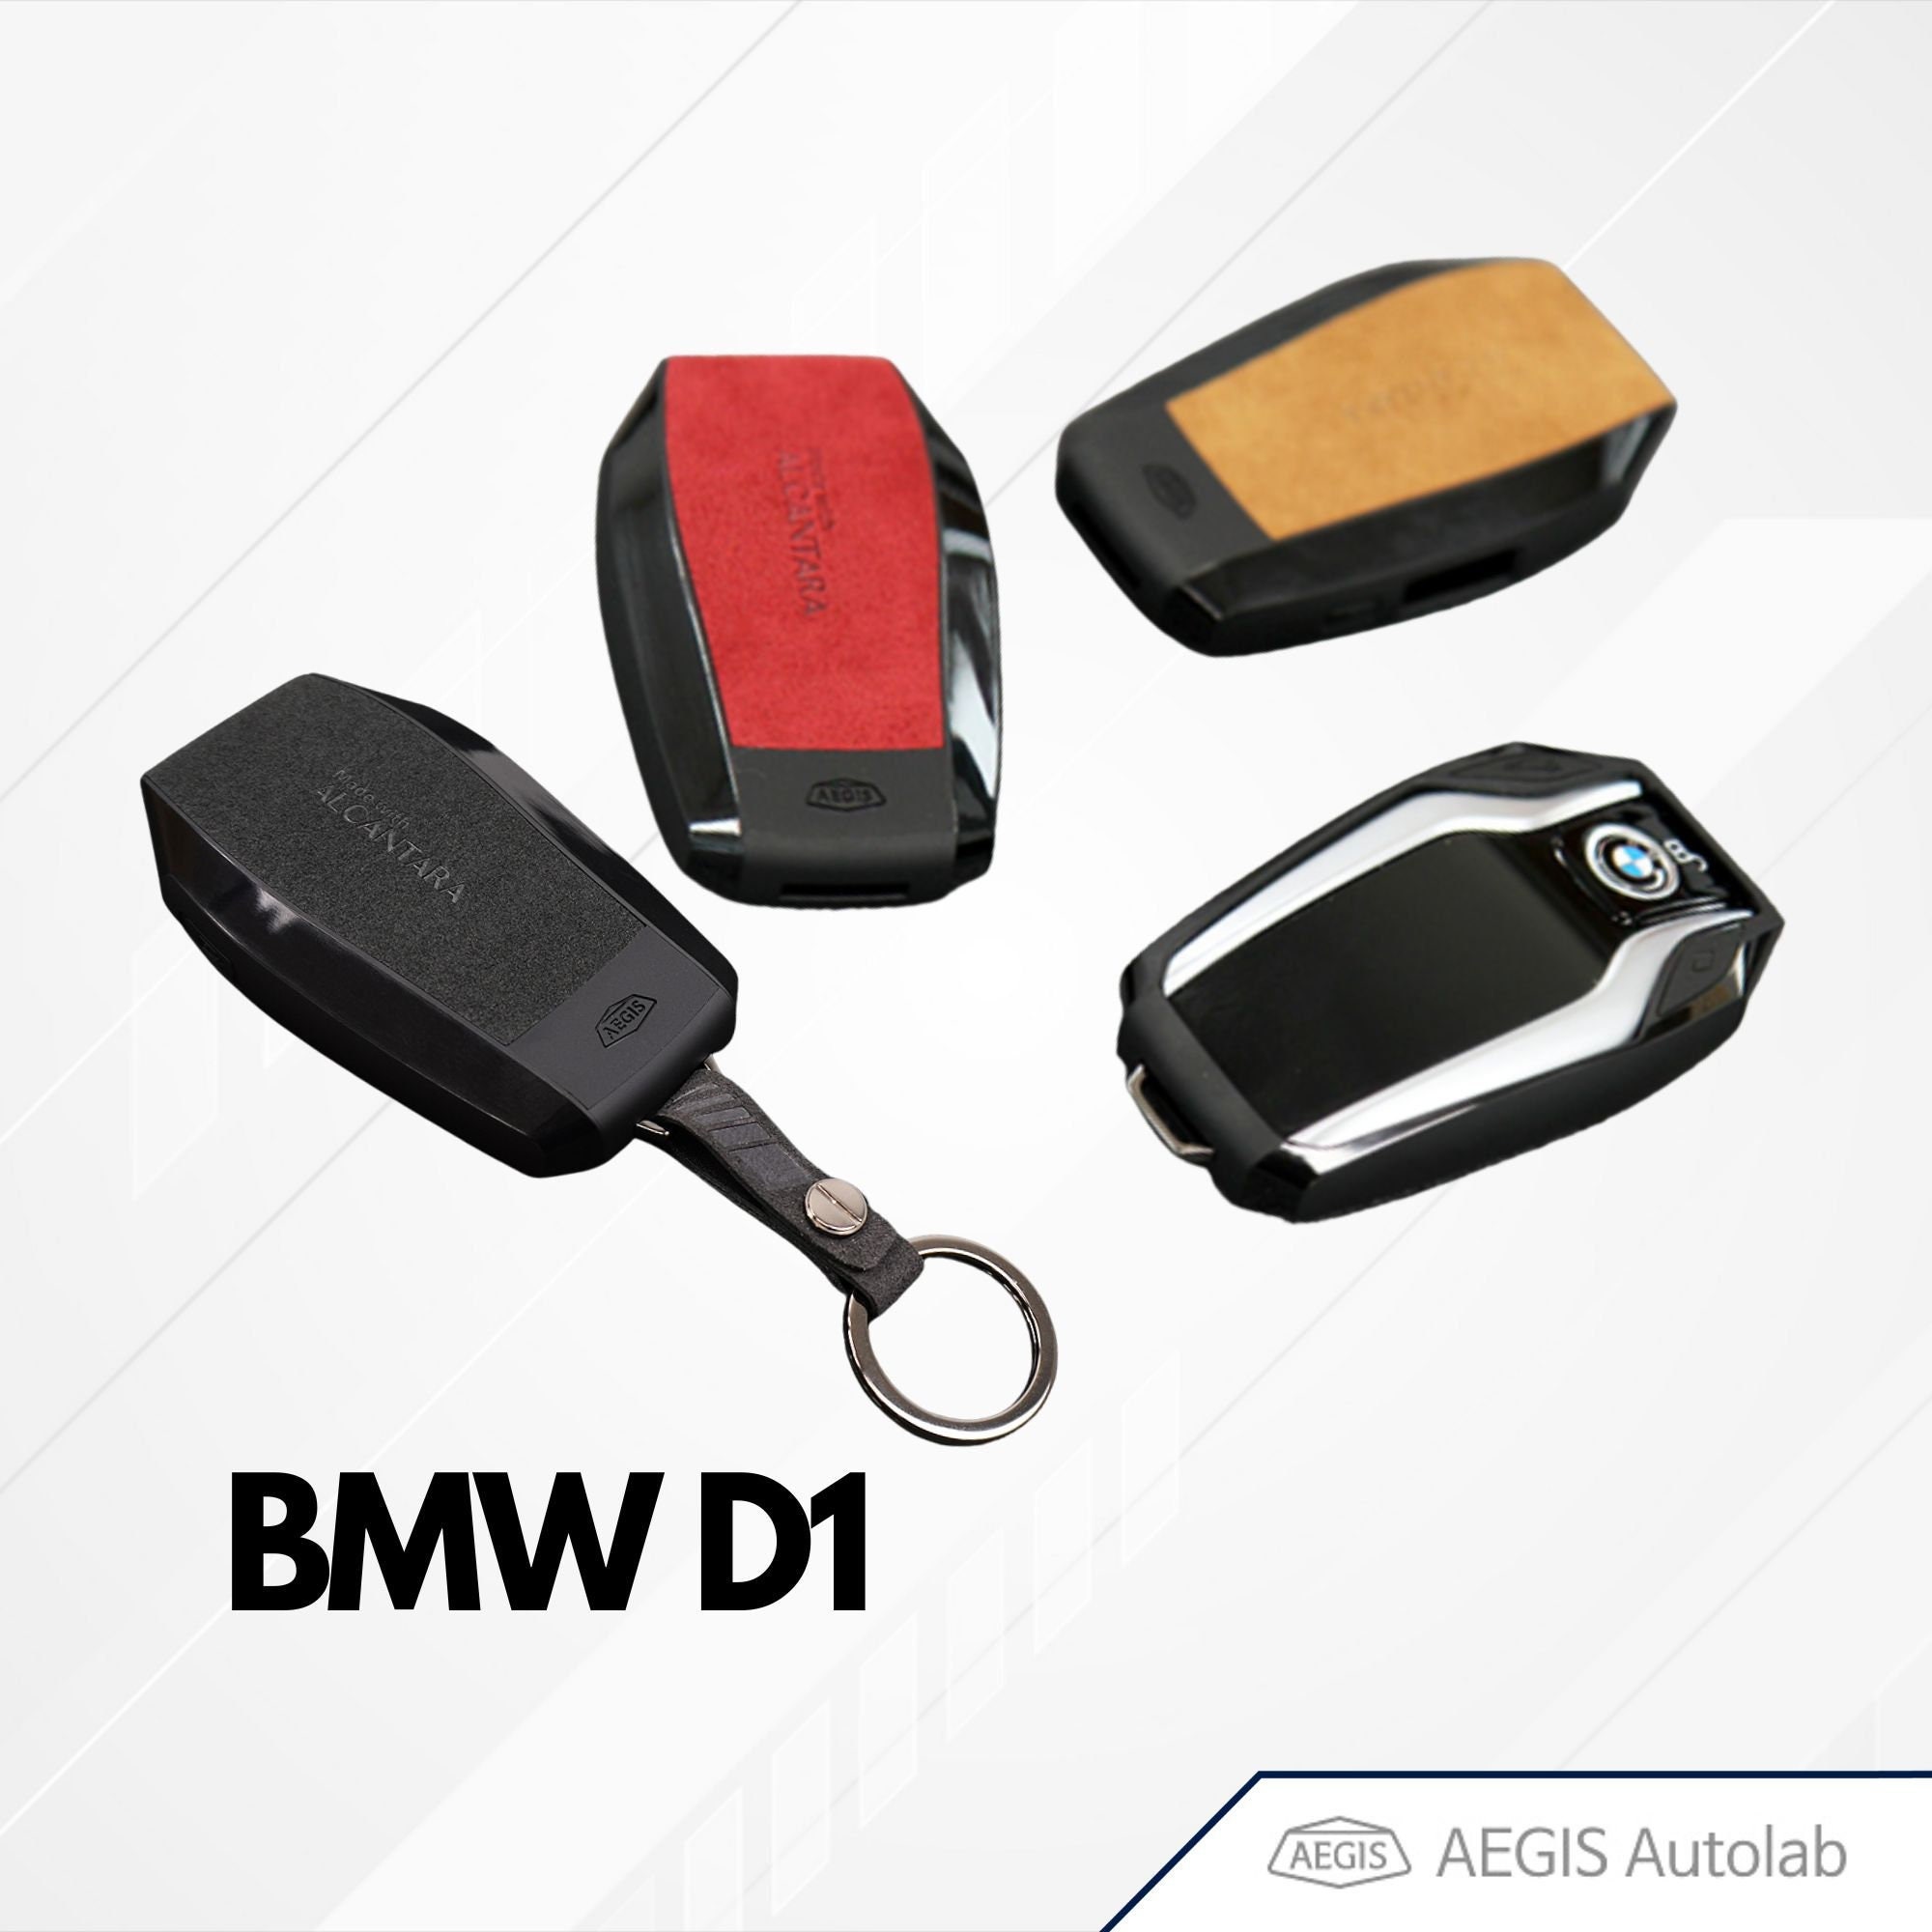 Bmw display key case - .de